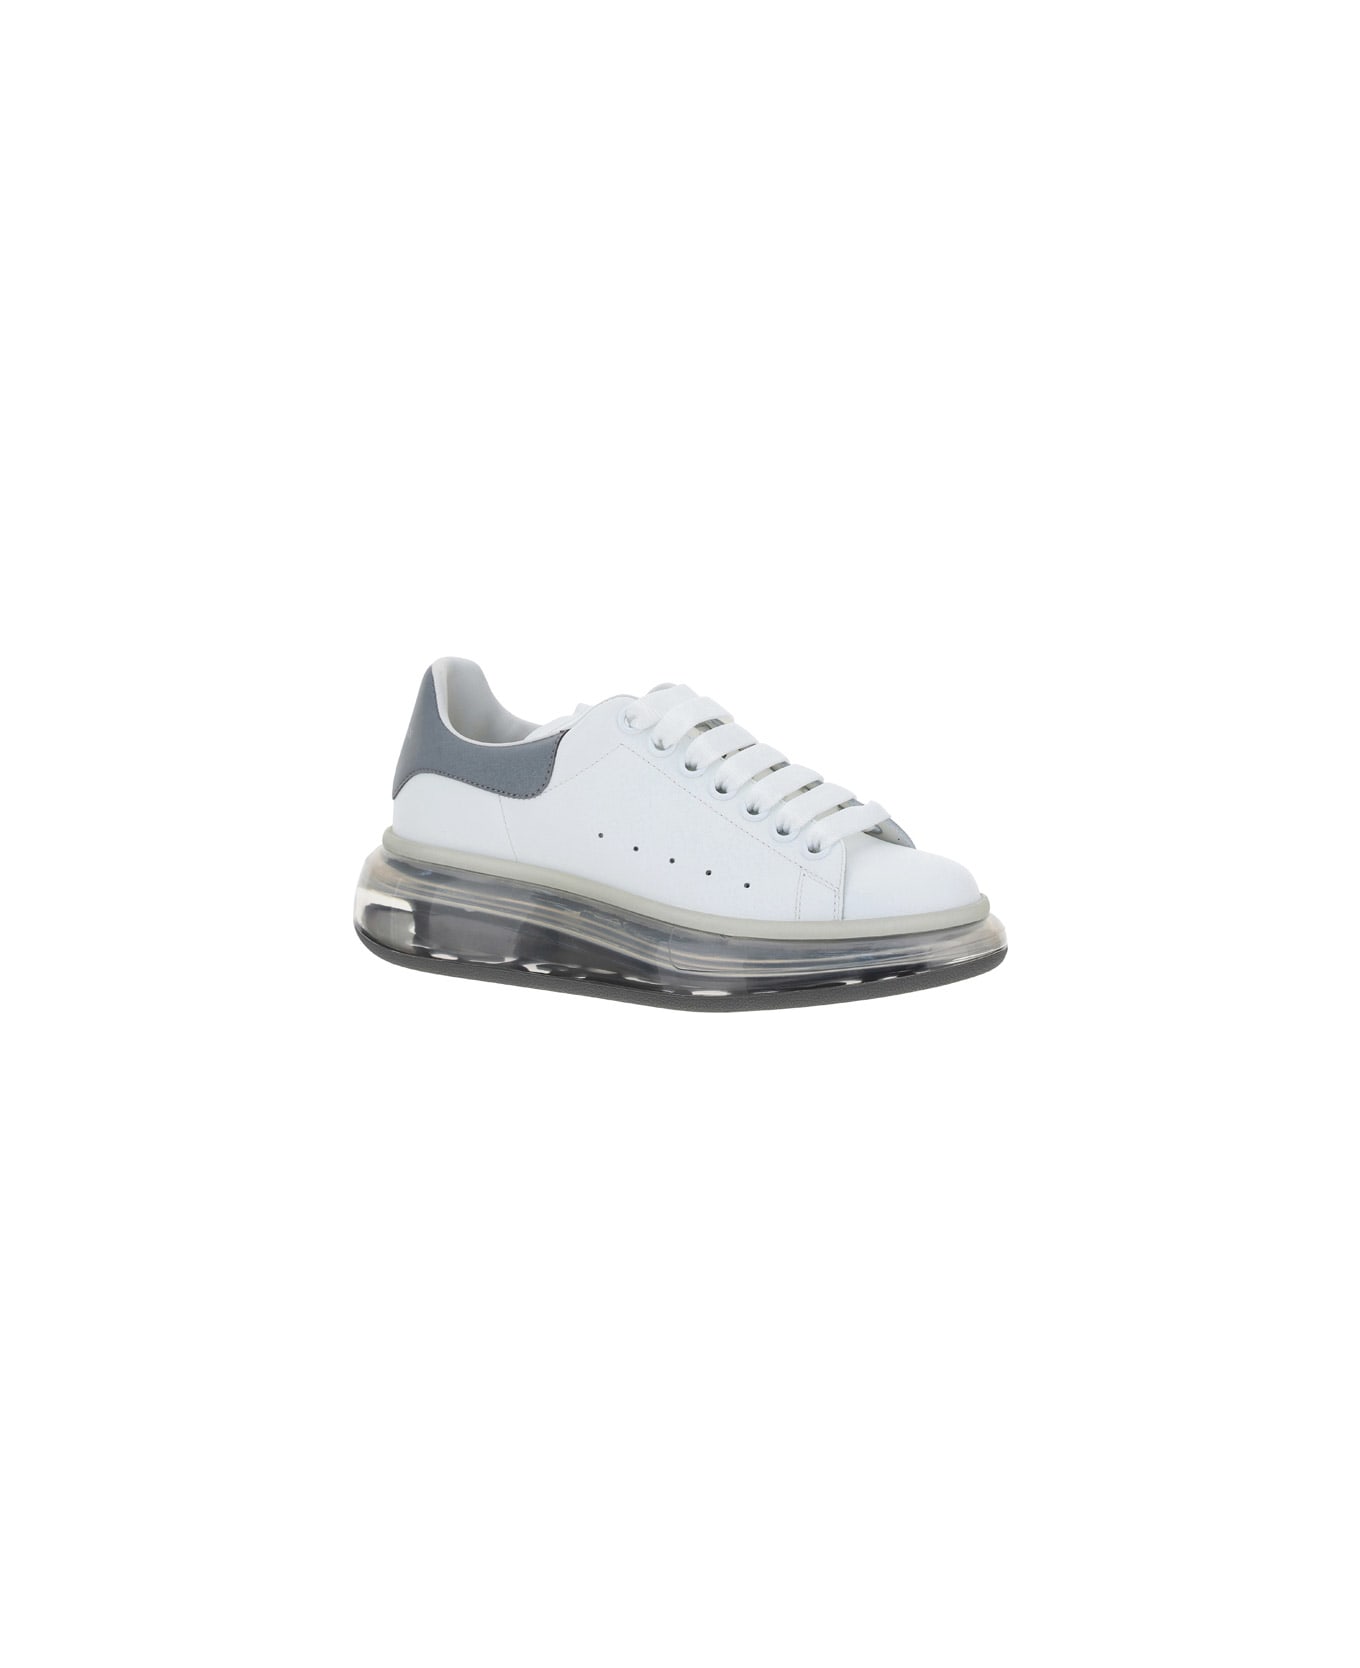 Alexander McQueen Sneakers - White/silver